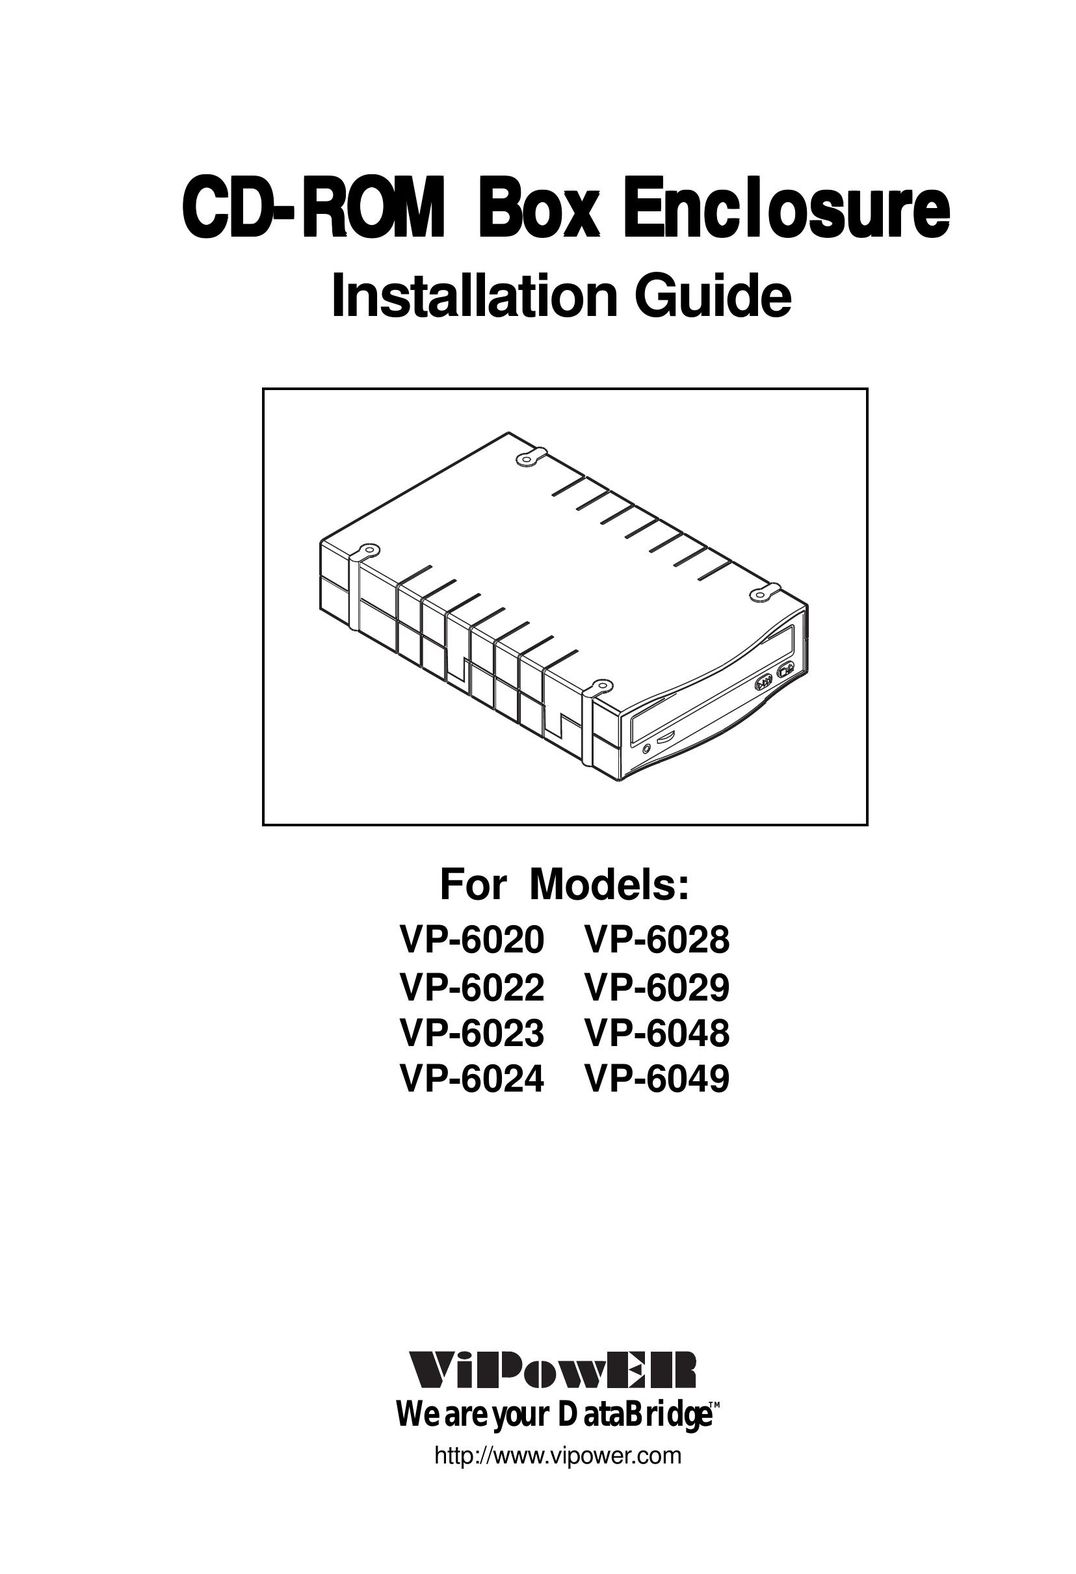 VIPowER VP-6049 Computer Hardware User Manual